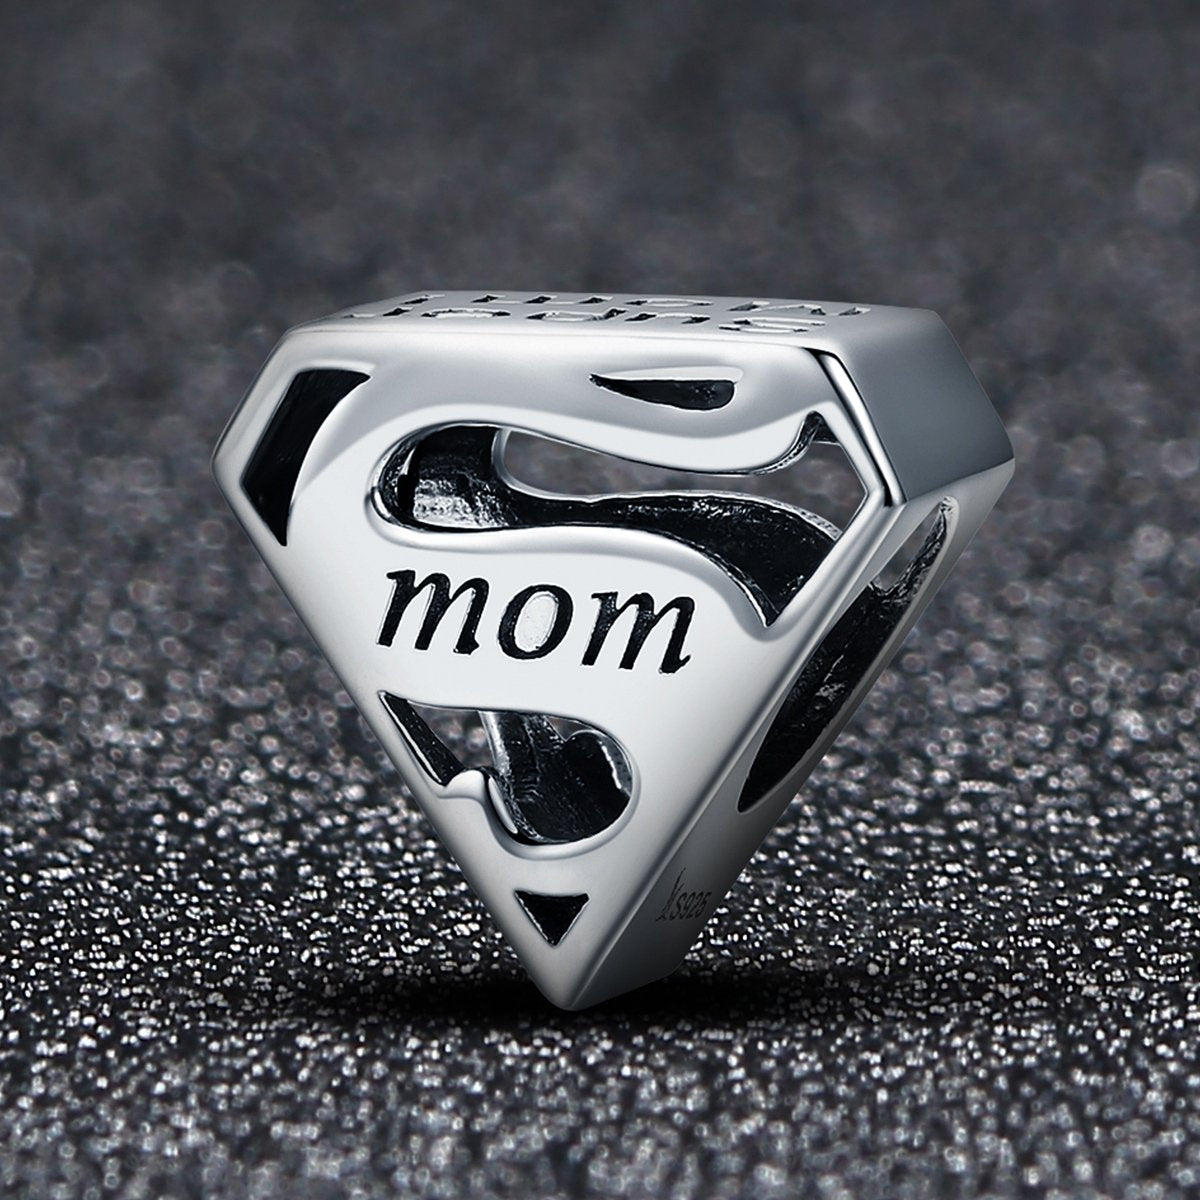 Sterling 925 silver charm the super mom bead pendant fits Pandora charm and European charm bracelet Xaxe.com